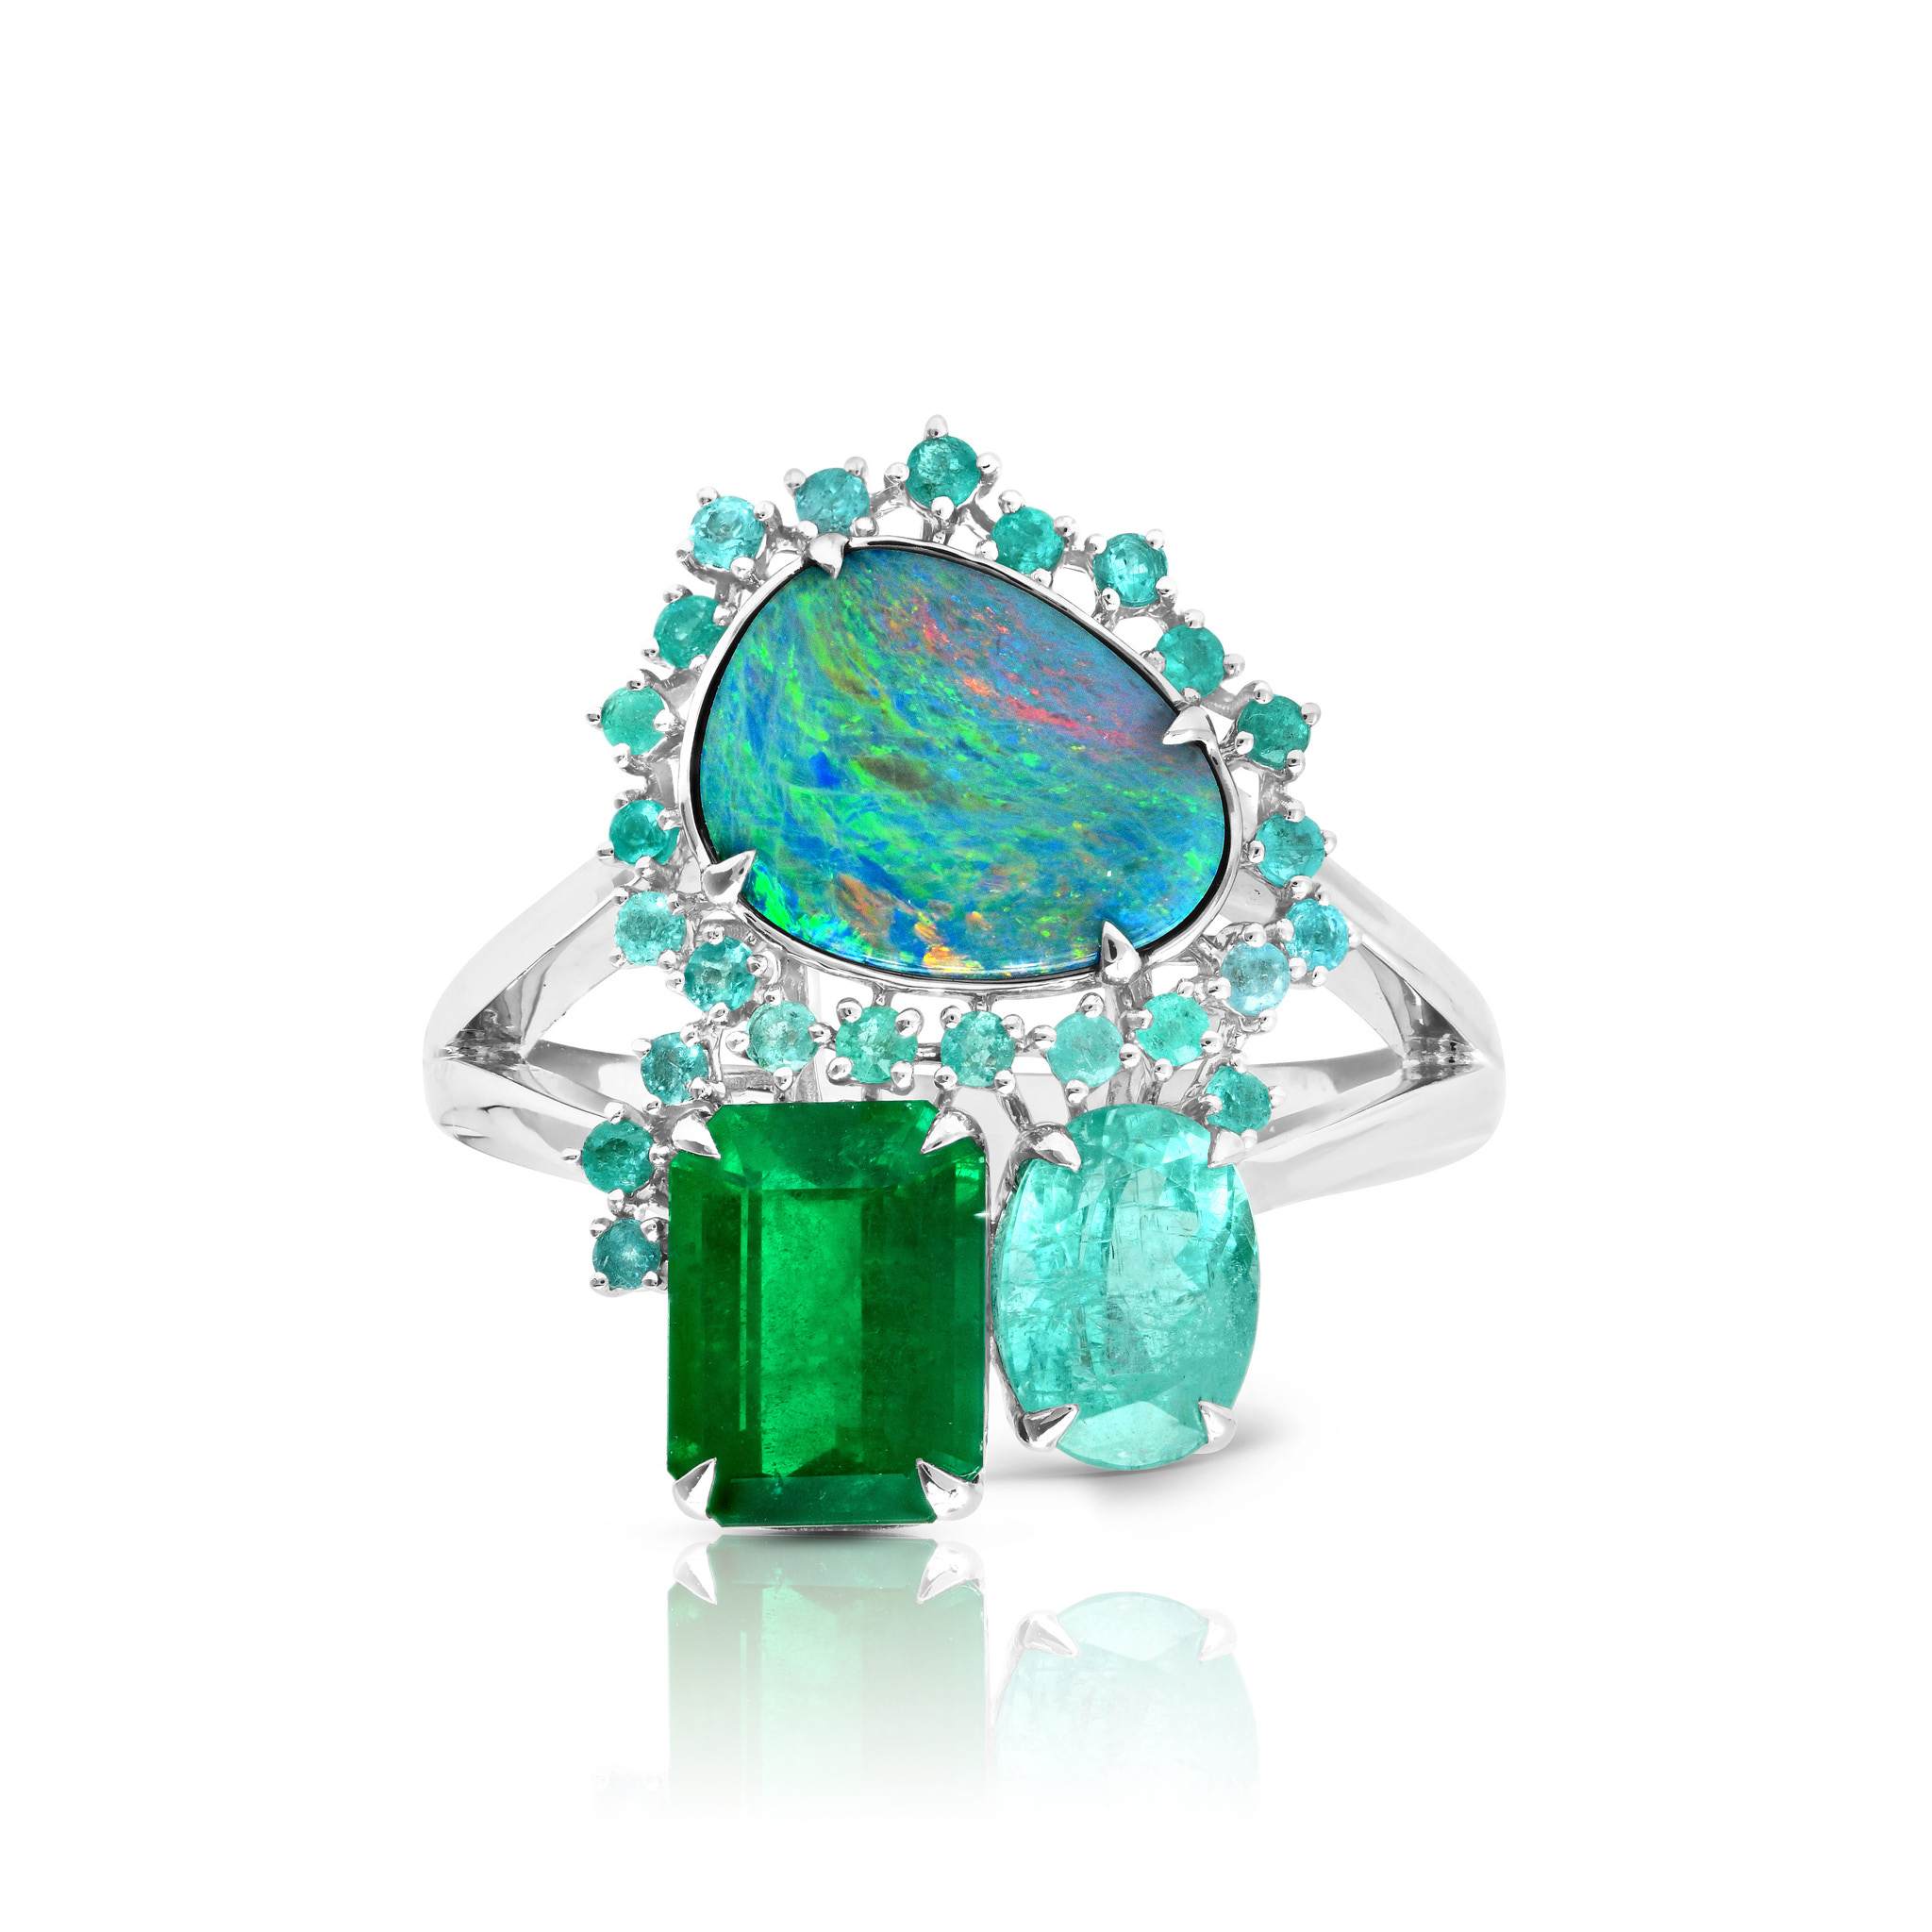 Emerald, Opal and Graziela Tourmaline Trio Ring